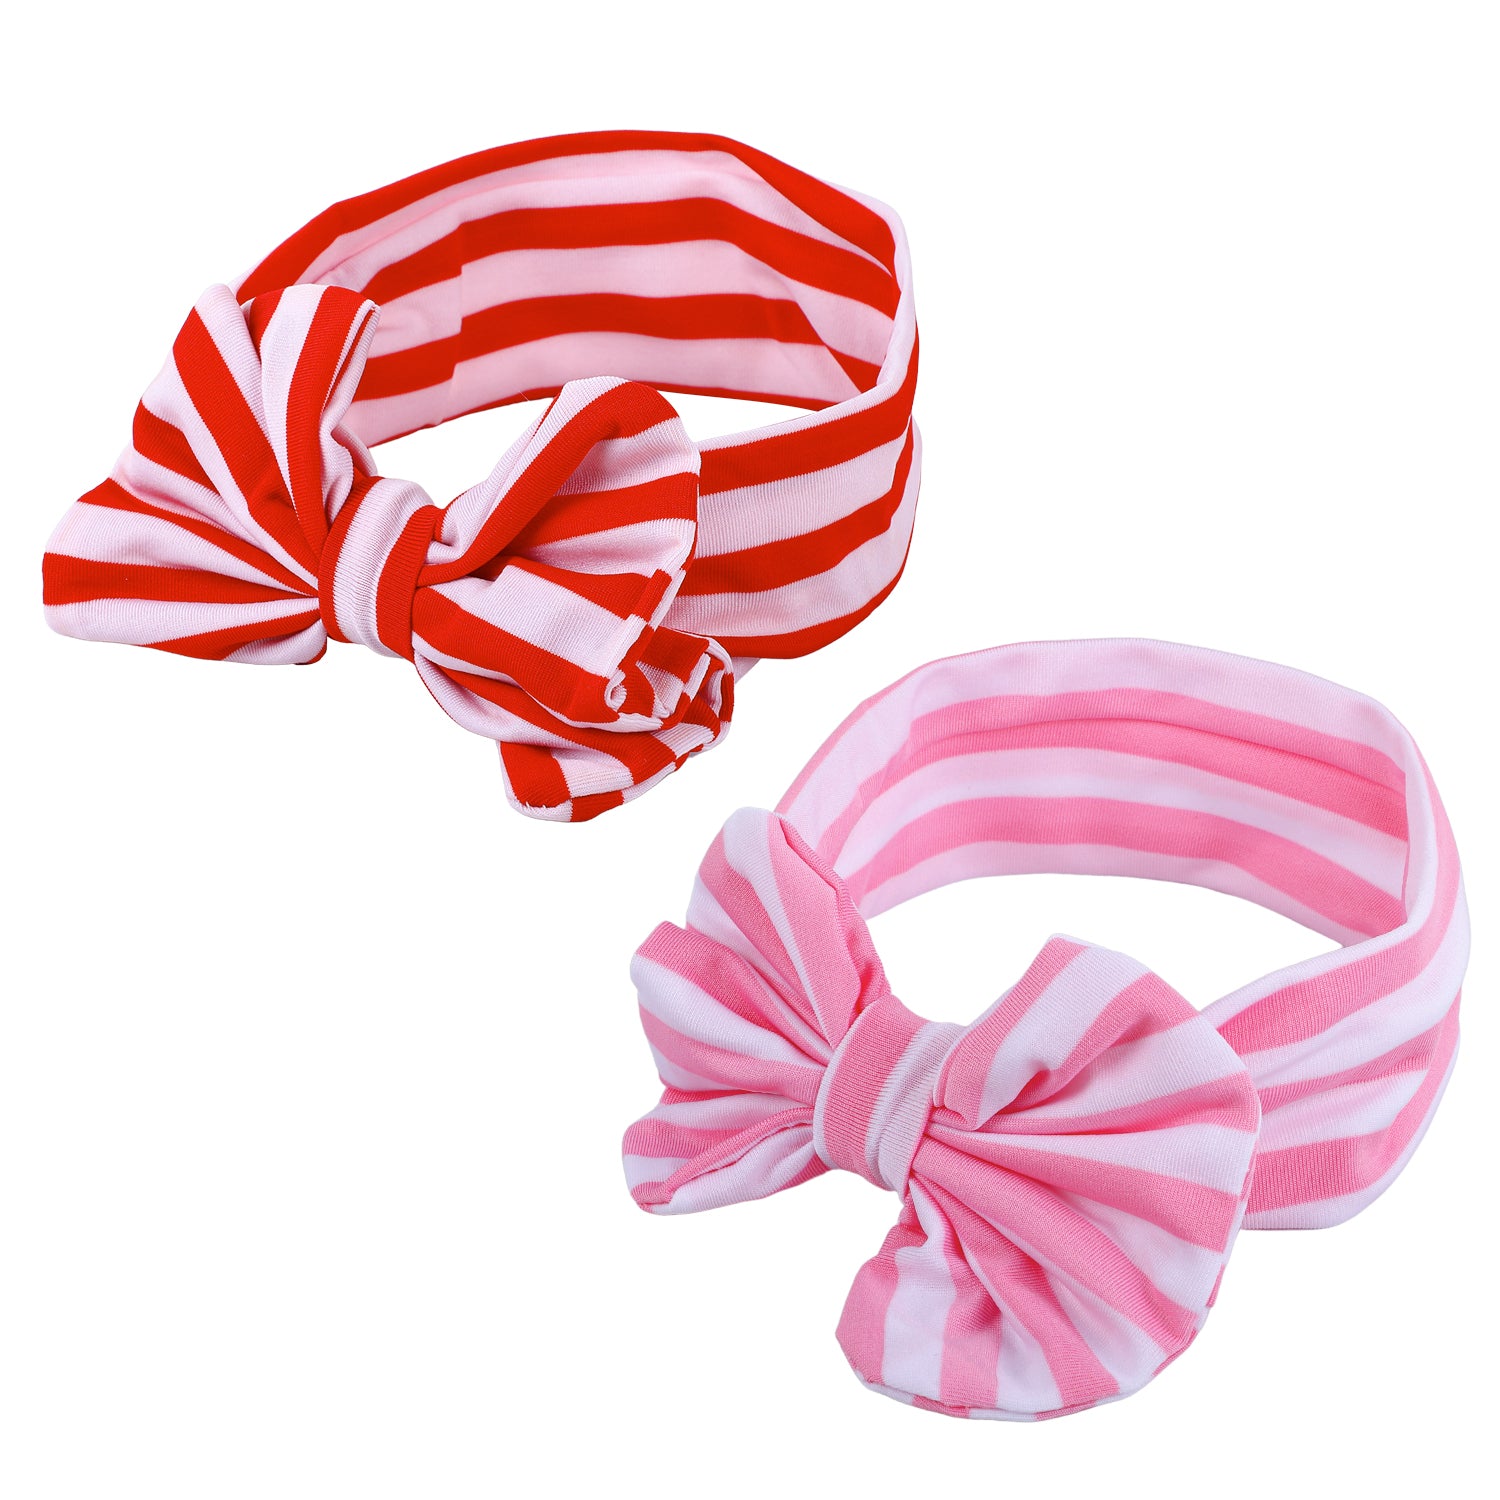 Stripes Soft Bow Headbands 2 Pcs - Red, Pink